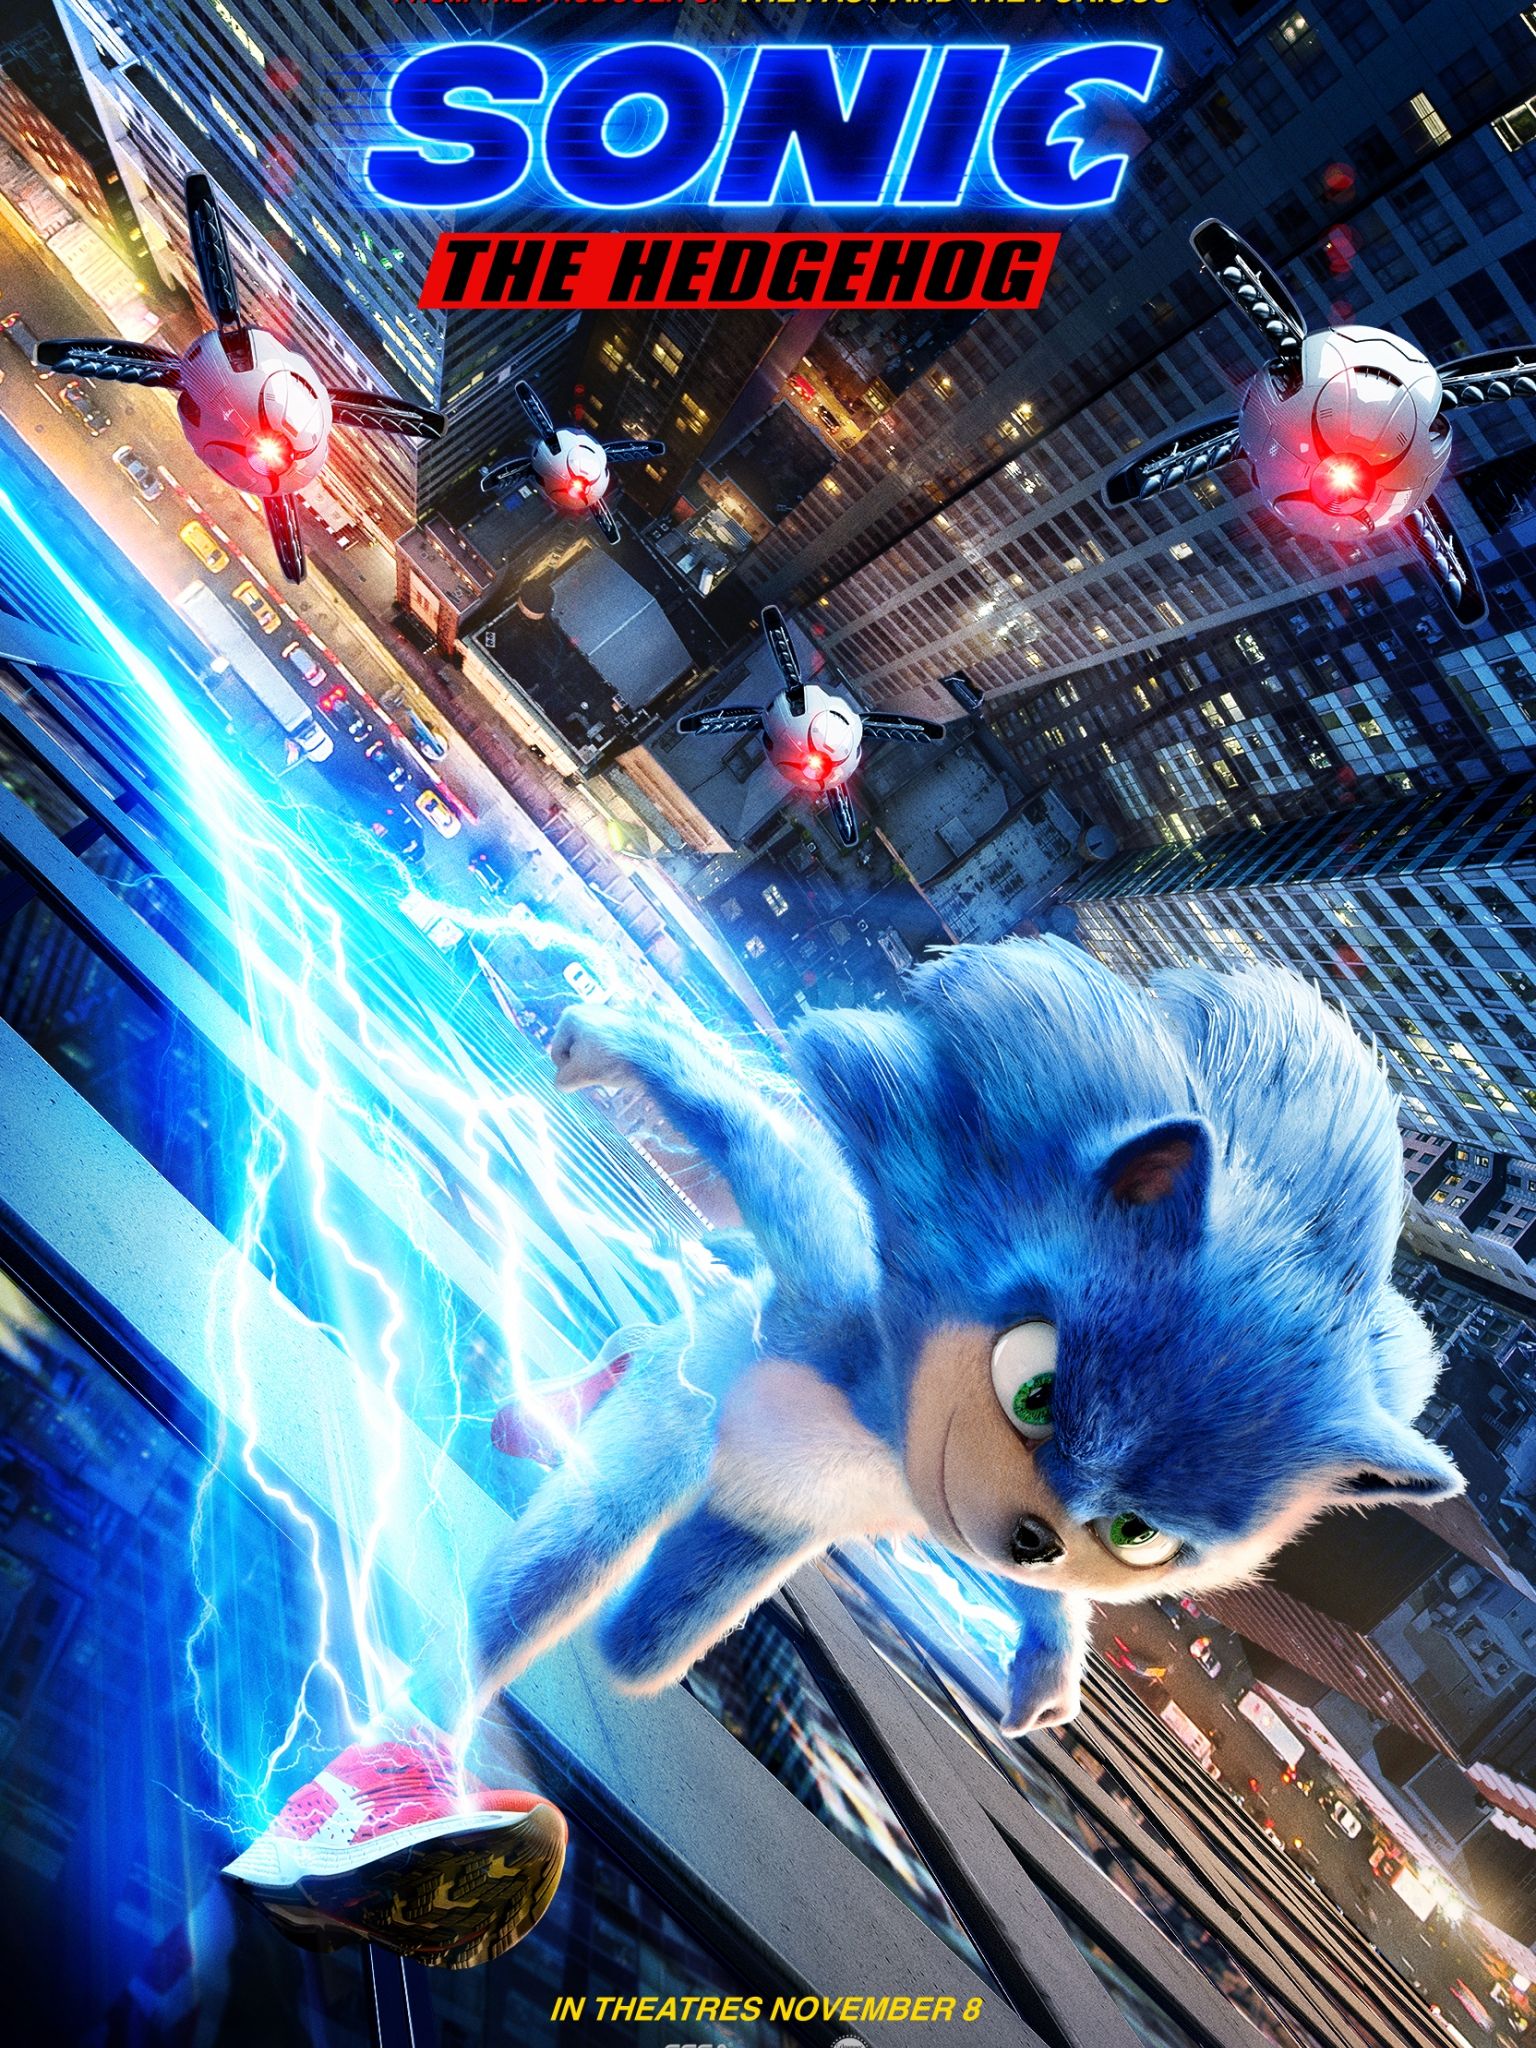 Free download Sonic the Hedgehog 2020 IMDb [1664x2466]